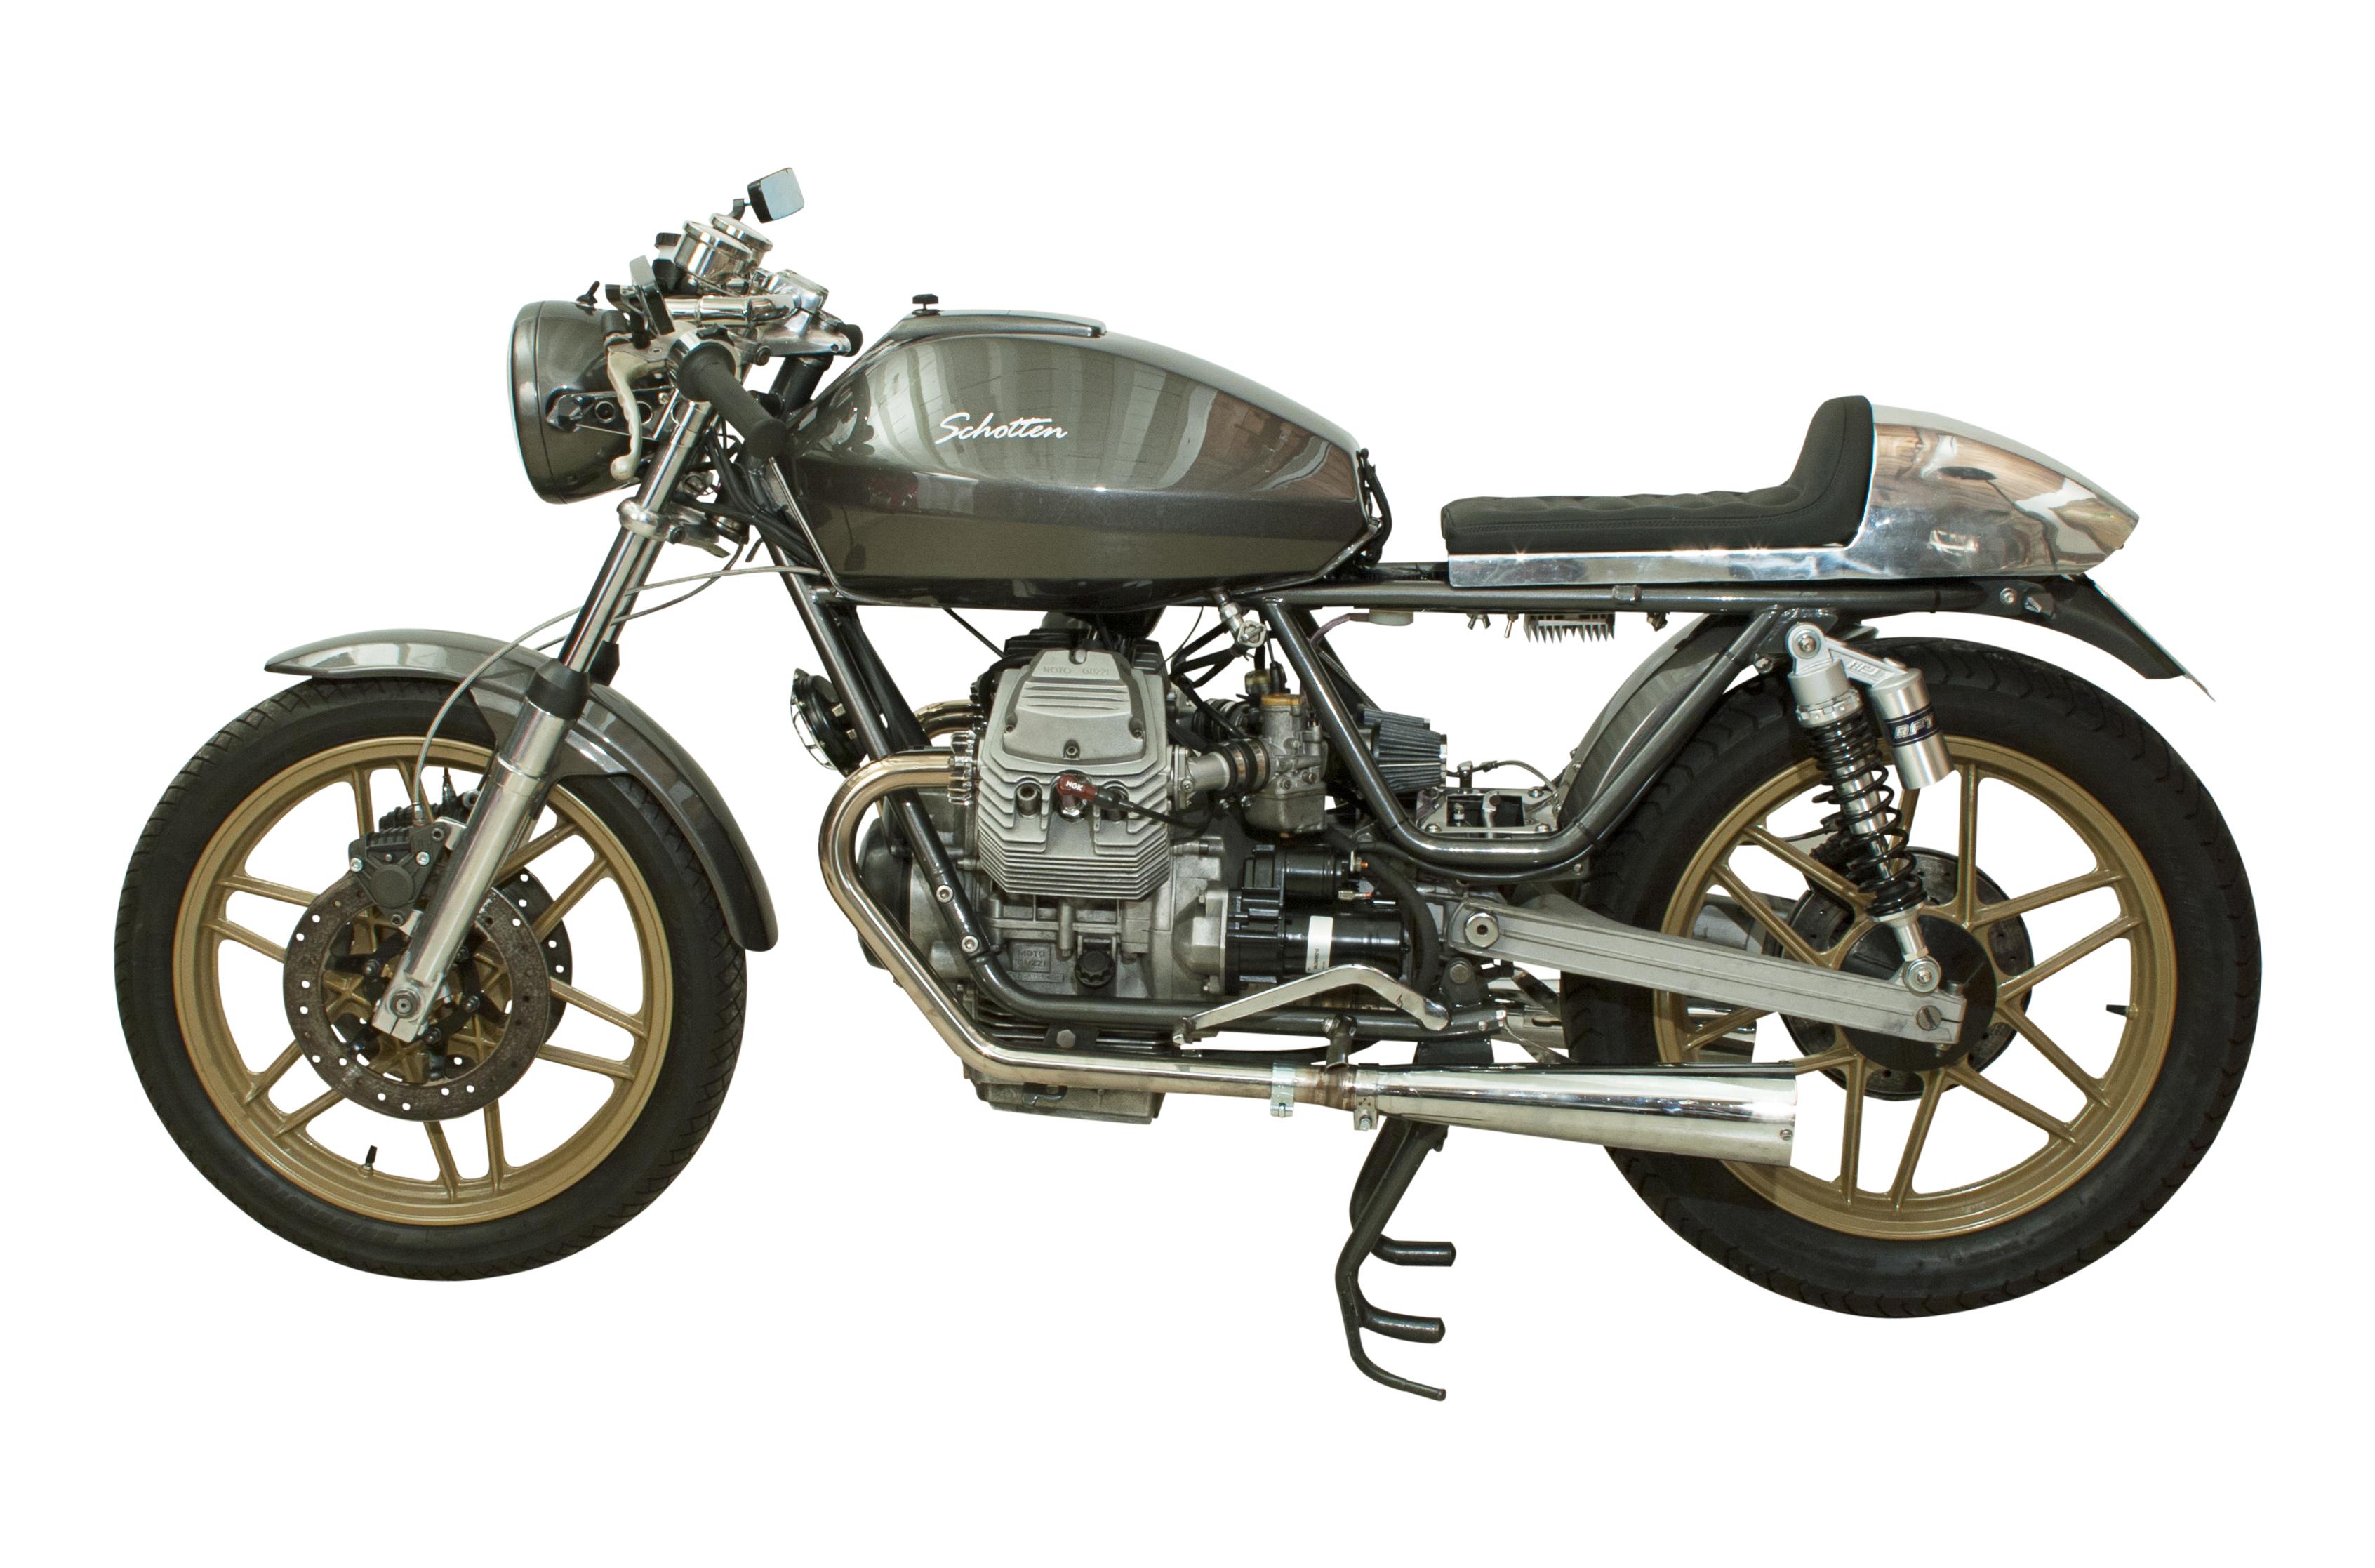 1982 Moto Guzzi Cafe Racer V50 Italian Motorcycle For Sale 7